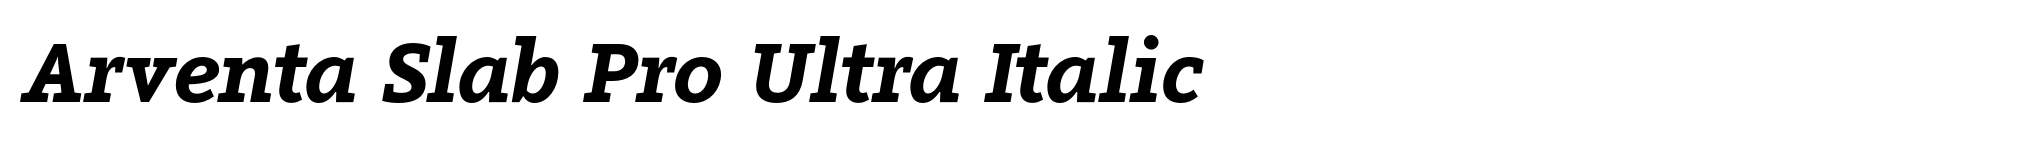 Arventa Slab Pro Ultra Italic image